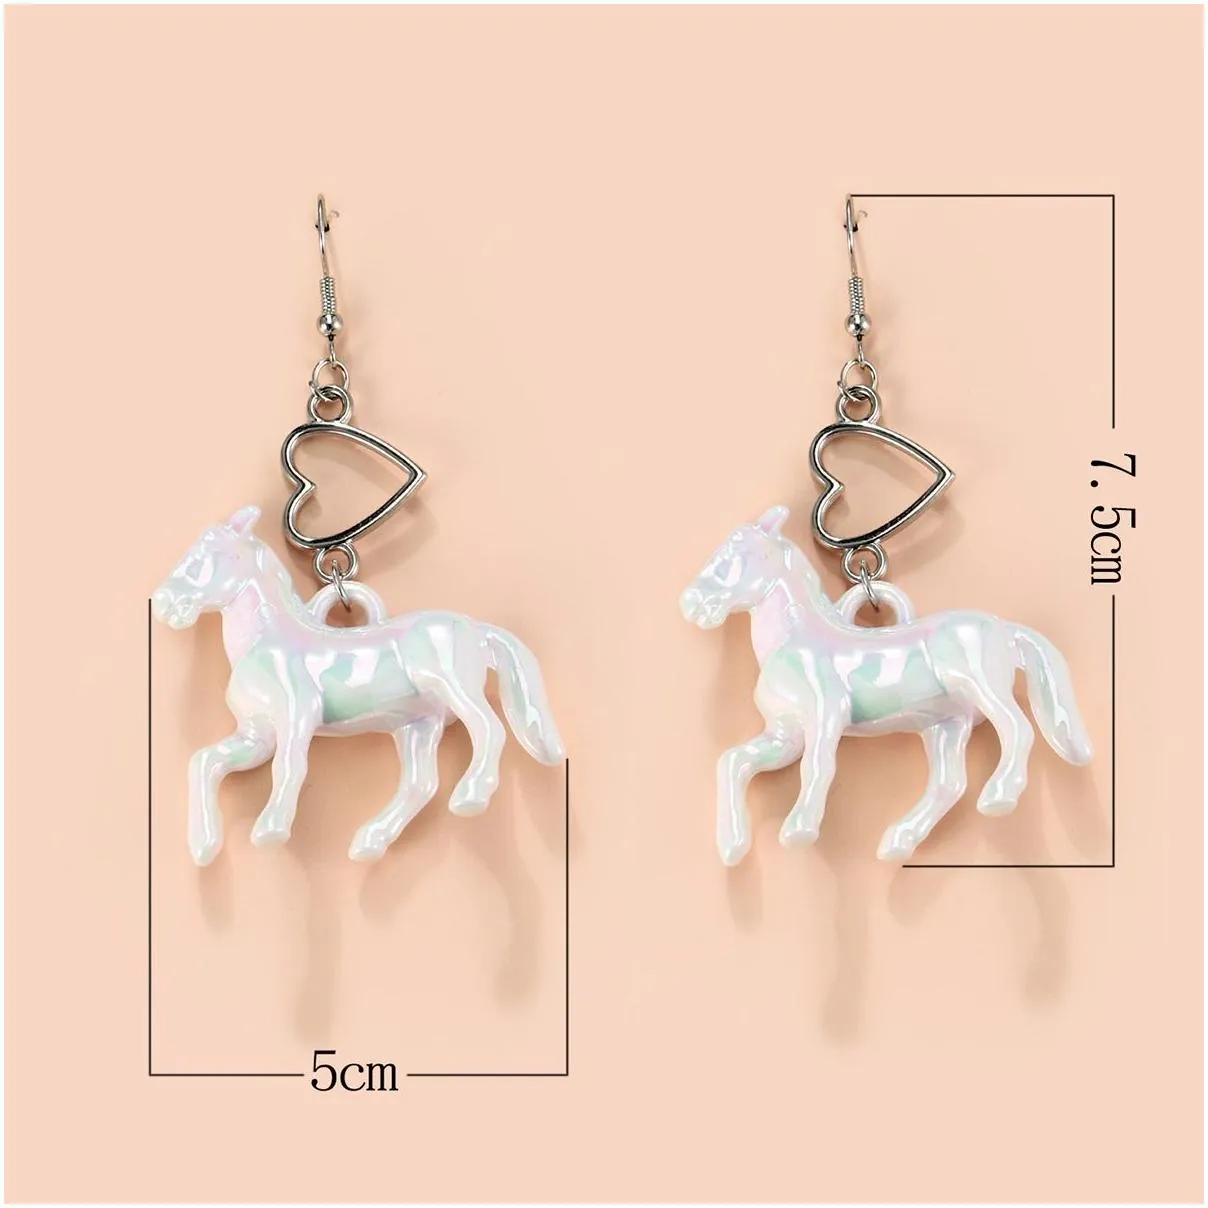 acrylic three-dimensional plastic pony earrings female earrings earrings earrings pendants jewelry decoration